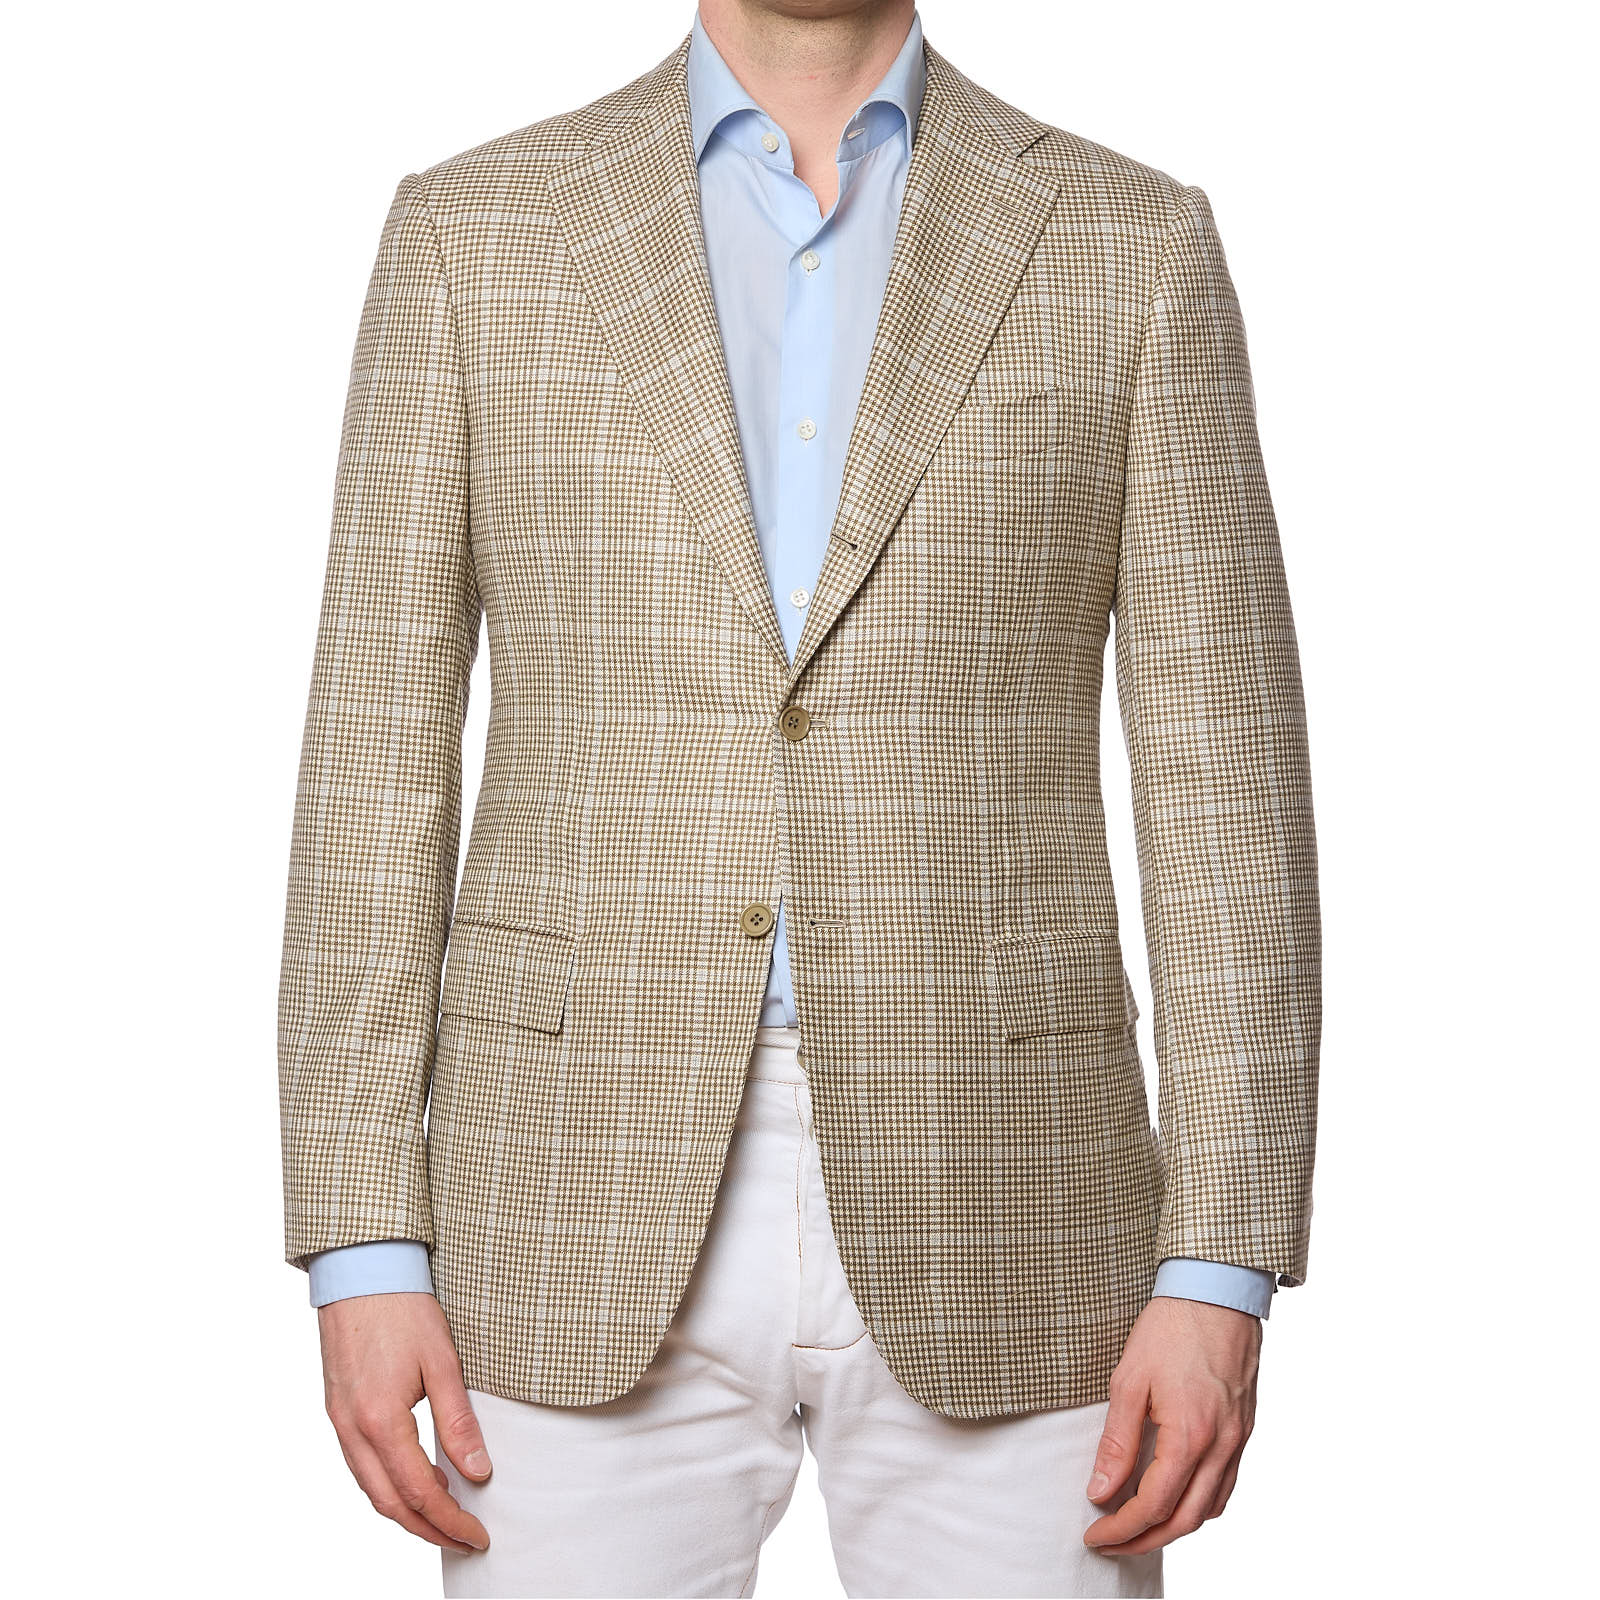 KITON Napoli for VANNUCCI Handmade Beige Plaid Cashmere Jacket EU 50 NEW US 40